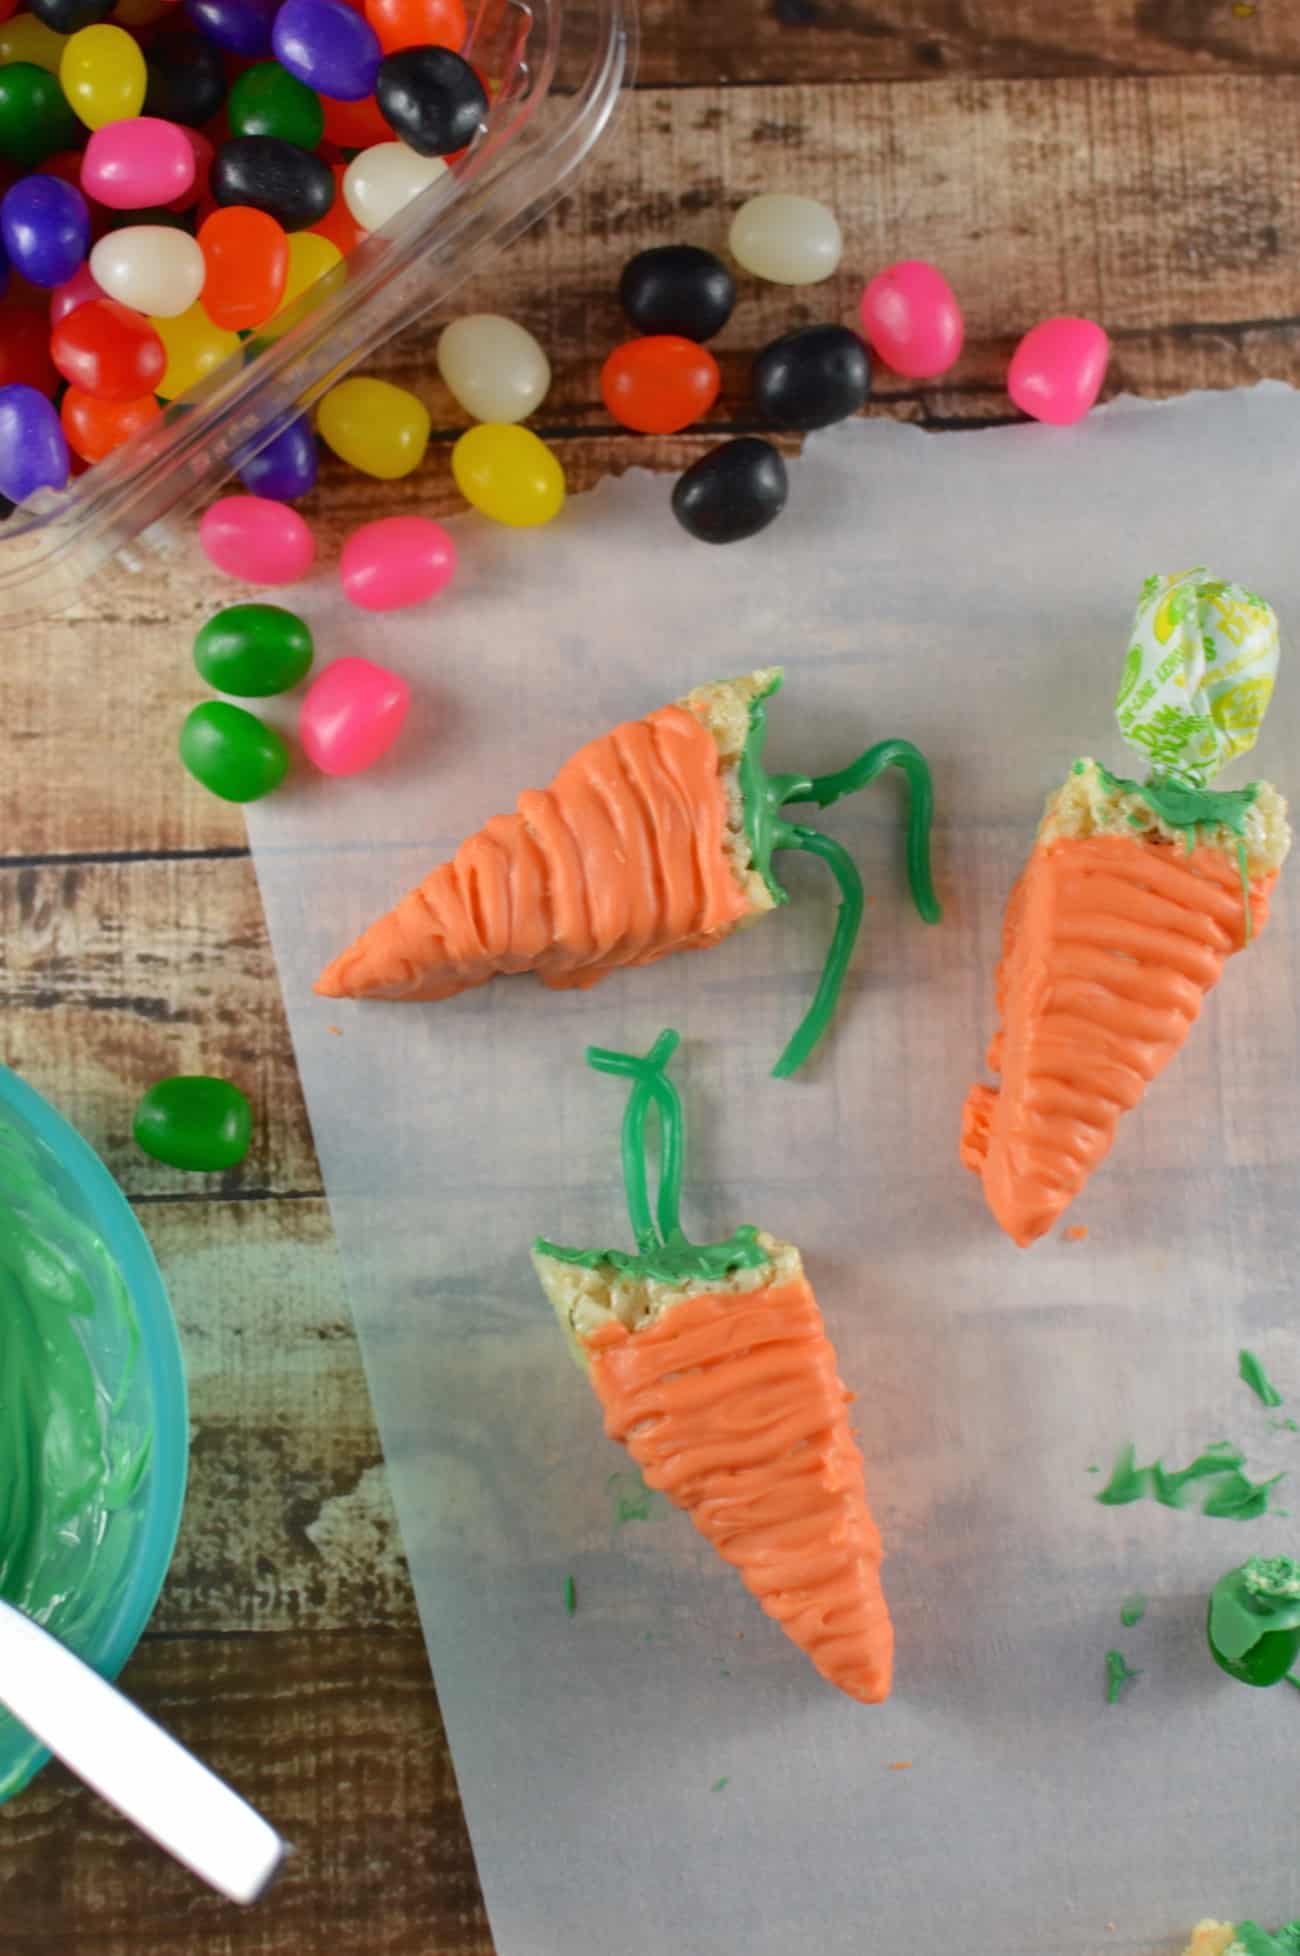 Easter treats that looks like carrots